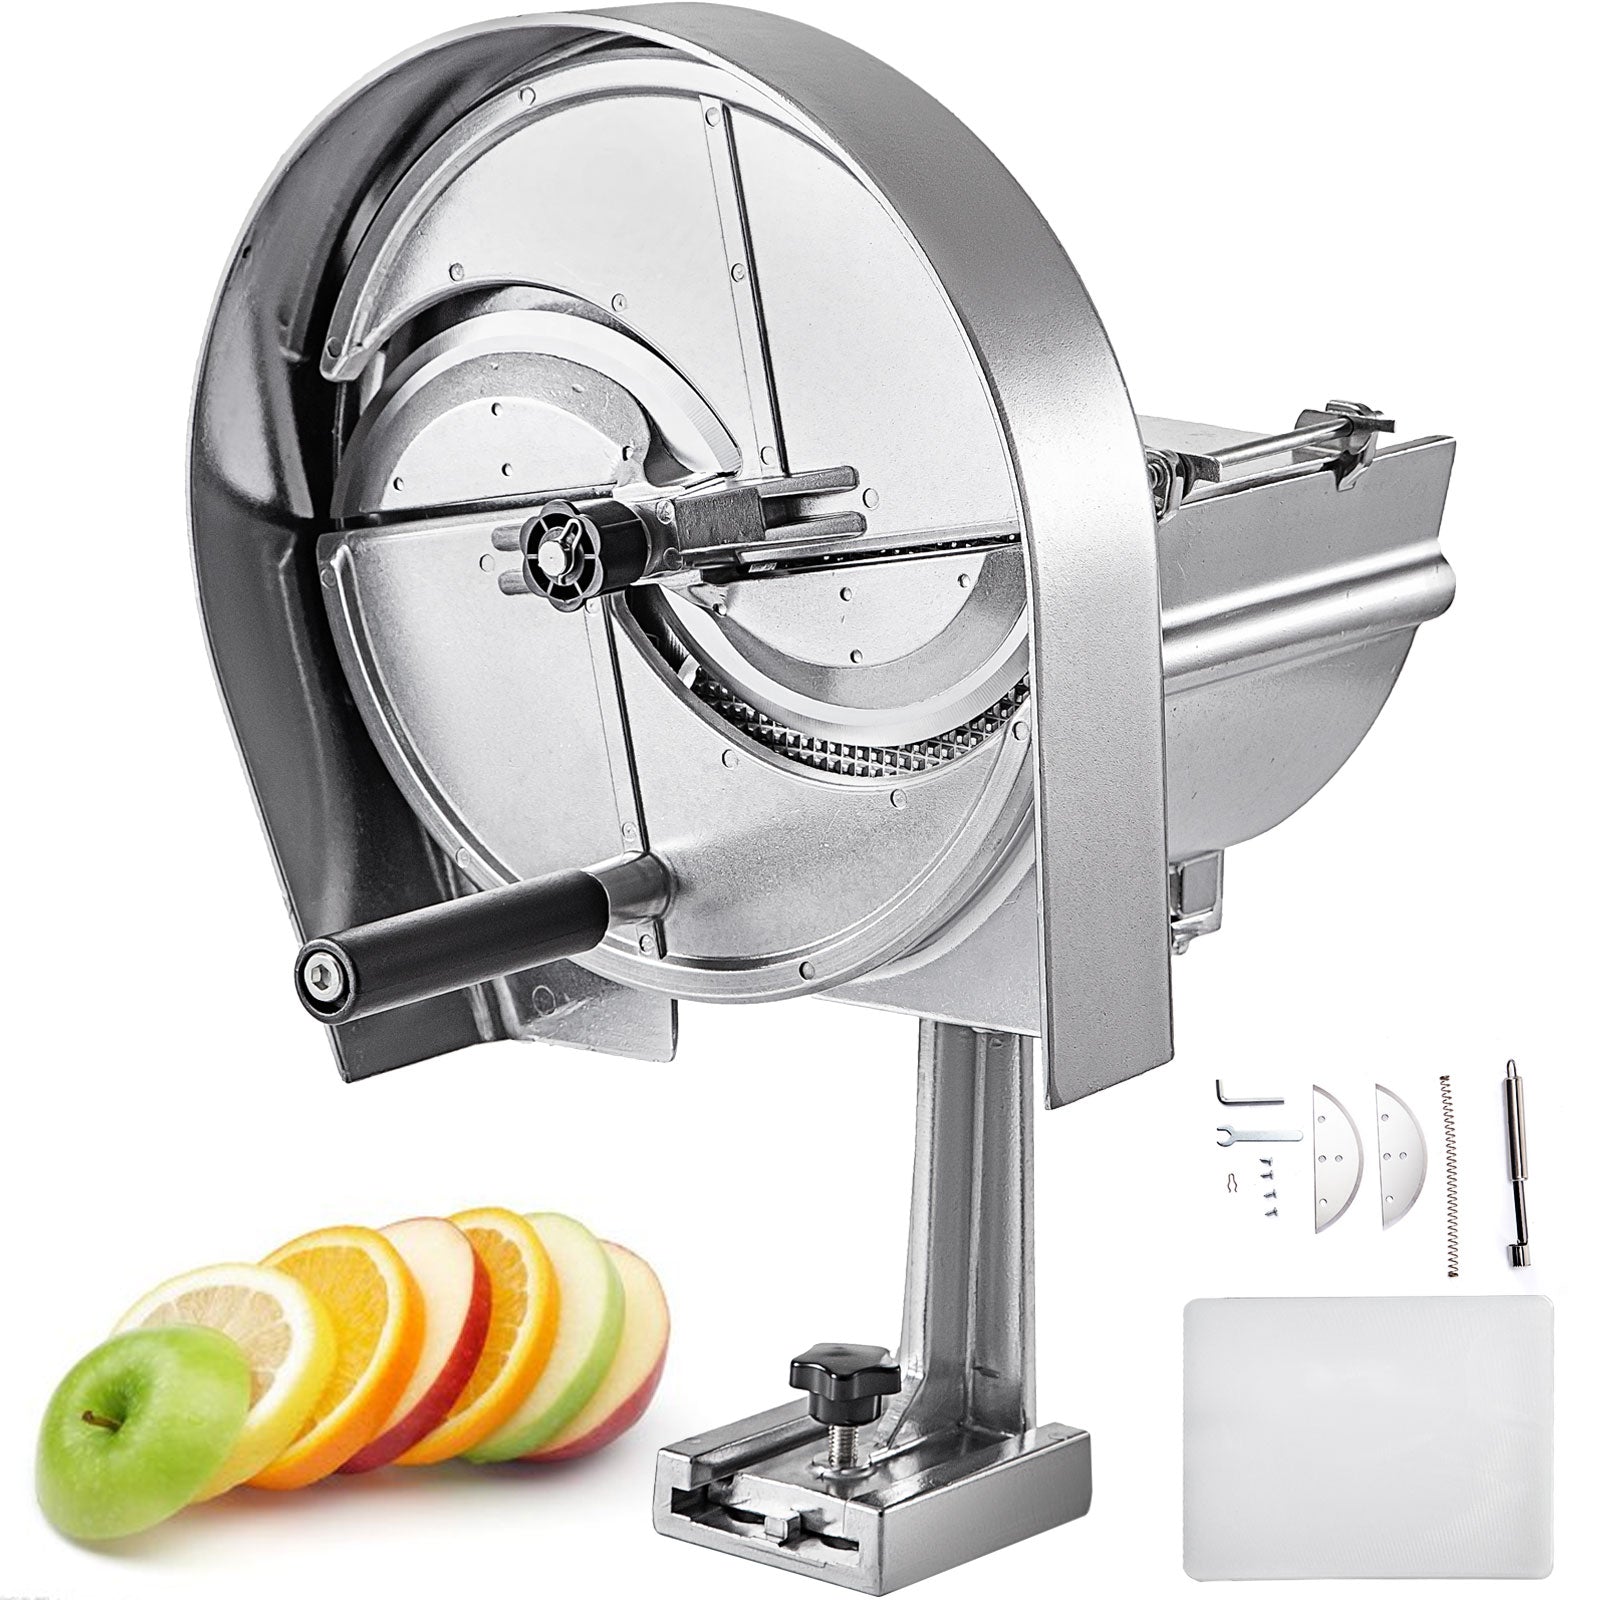 machine to slice vegetables